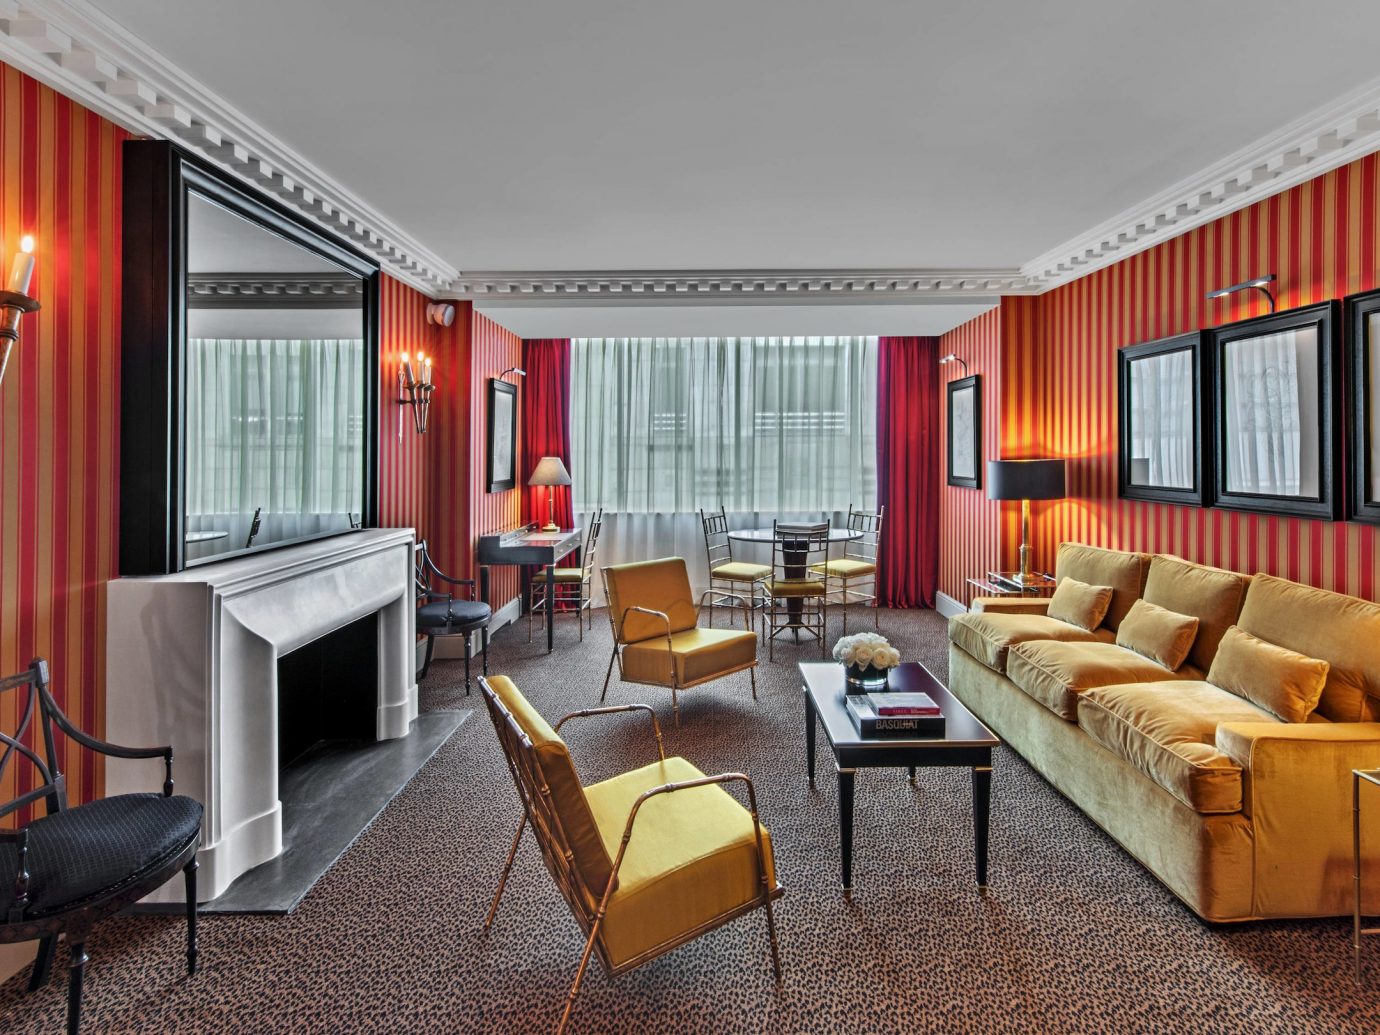 Suite view at the Hotel de Berri